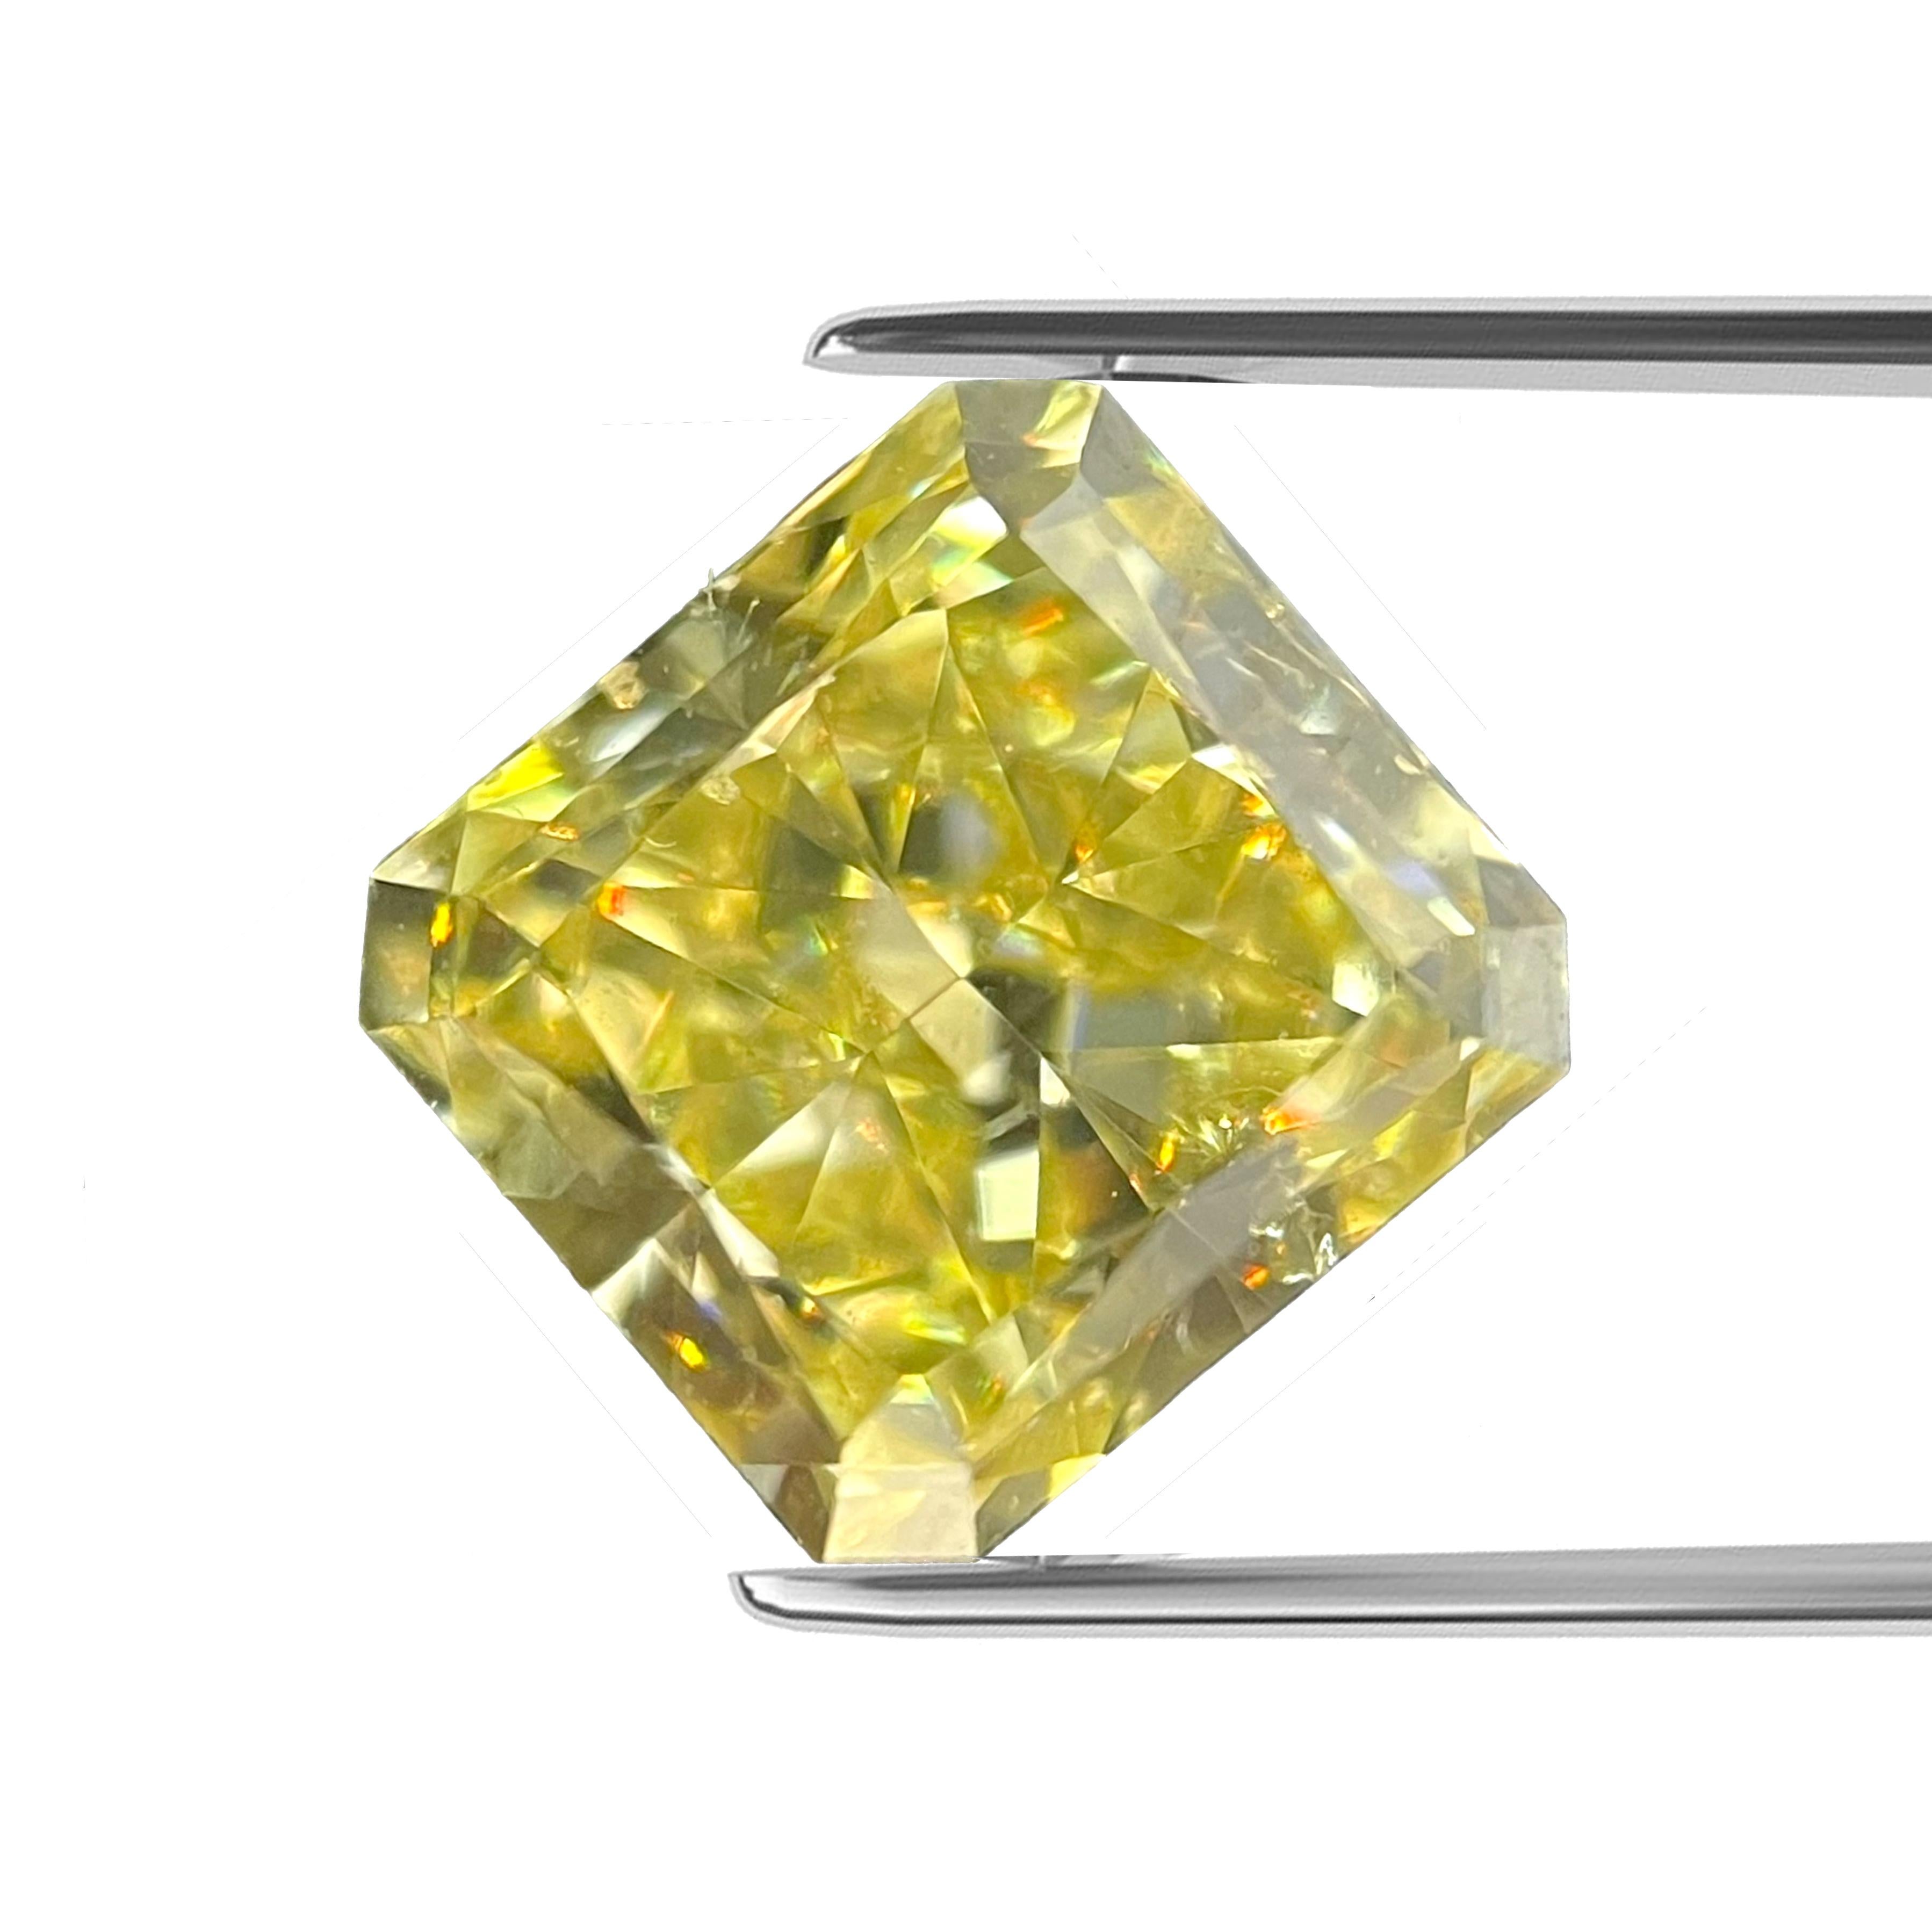 ITEM DESCRIPTION

ID #: NYC55507
Stone Shape: CUT-CORENRED RECTANGULAR MODIFIED BRILLIANT 
Diamond Weight: 1.01ct
Clarity: I1
Color: Fancy Yellow
Cut:	Excellent
Measurements: 5.67 x 5.34 x 3.65 mm
Depth %:	68.4%
Table %:	68%
Symmetry: Good
Polish: